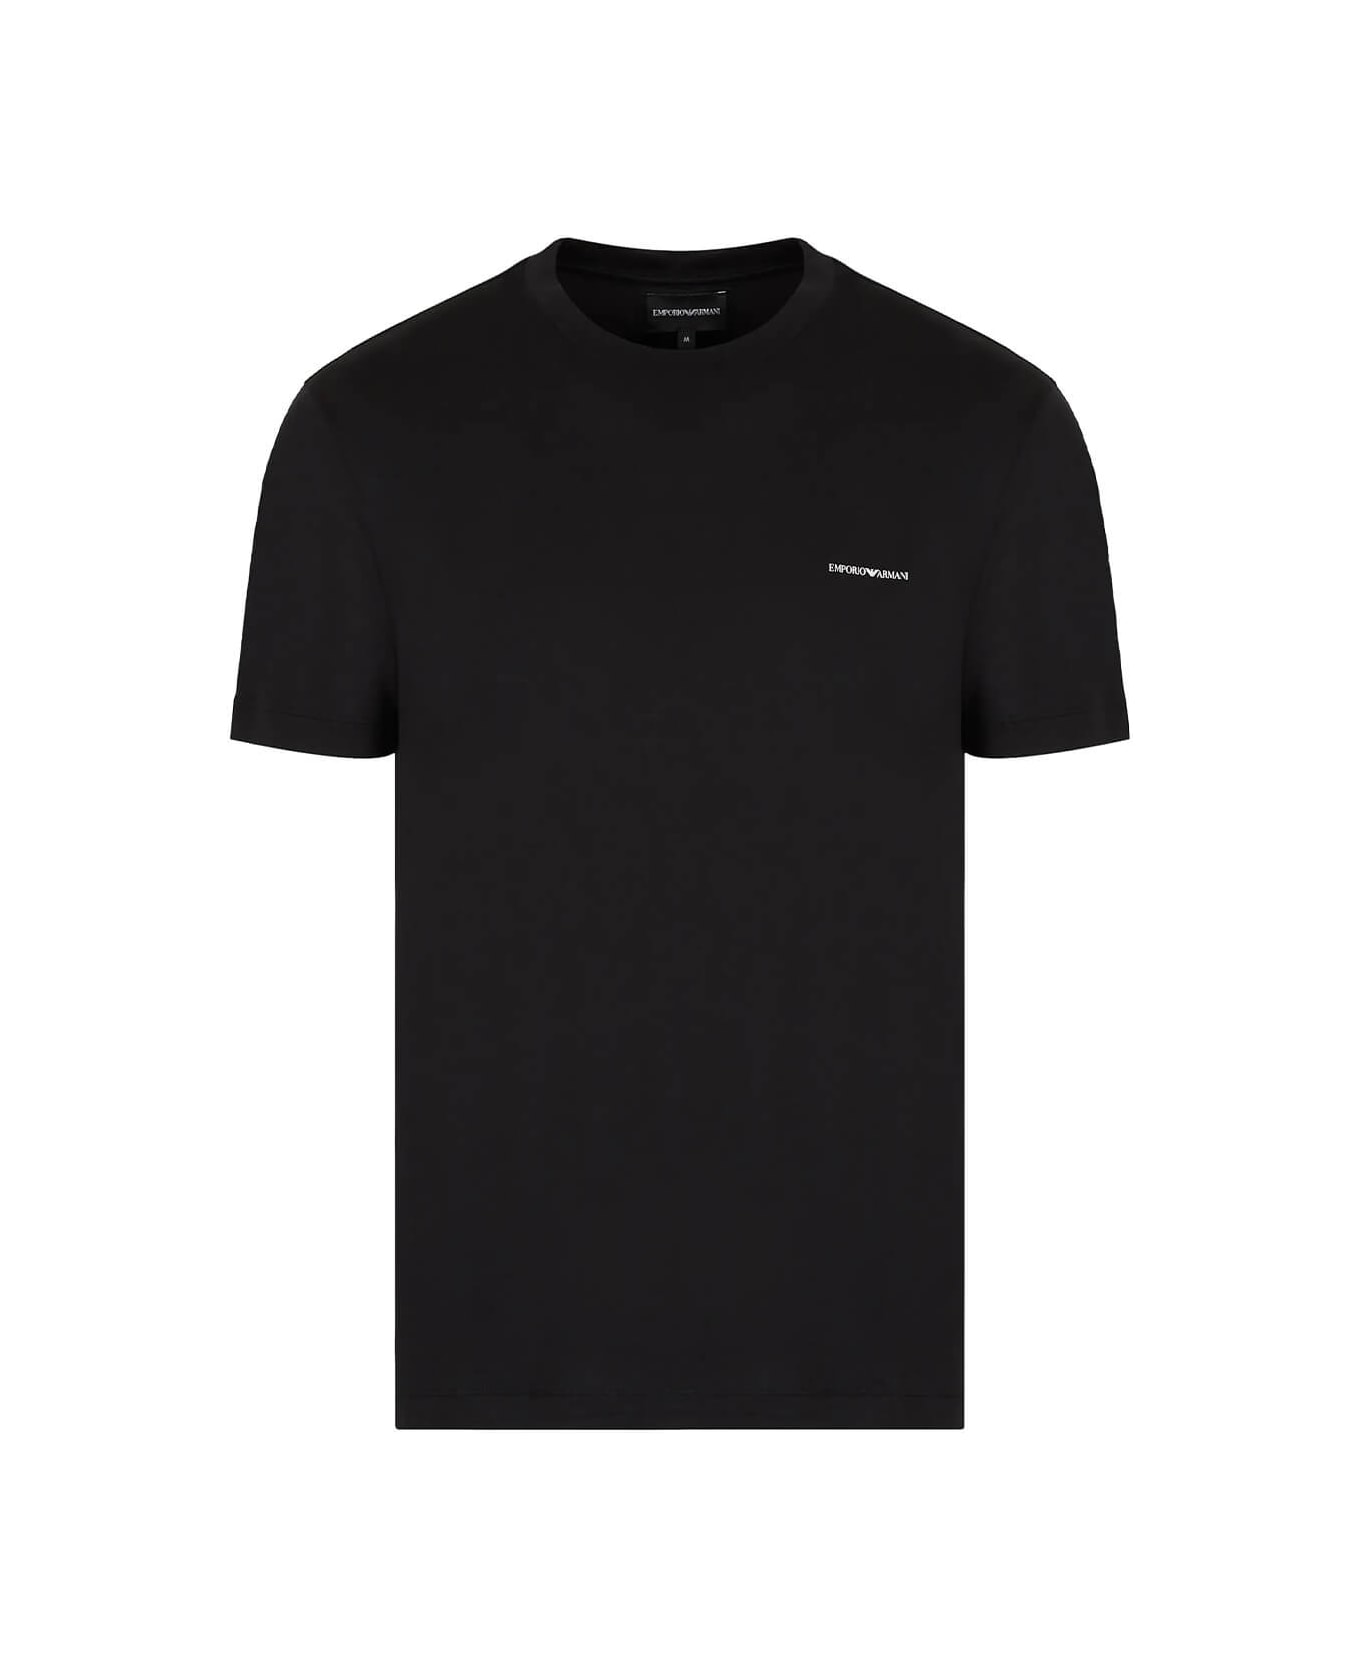 Emporio Armani Essential Black T-shirt - Black シャツ